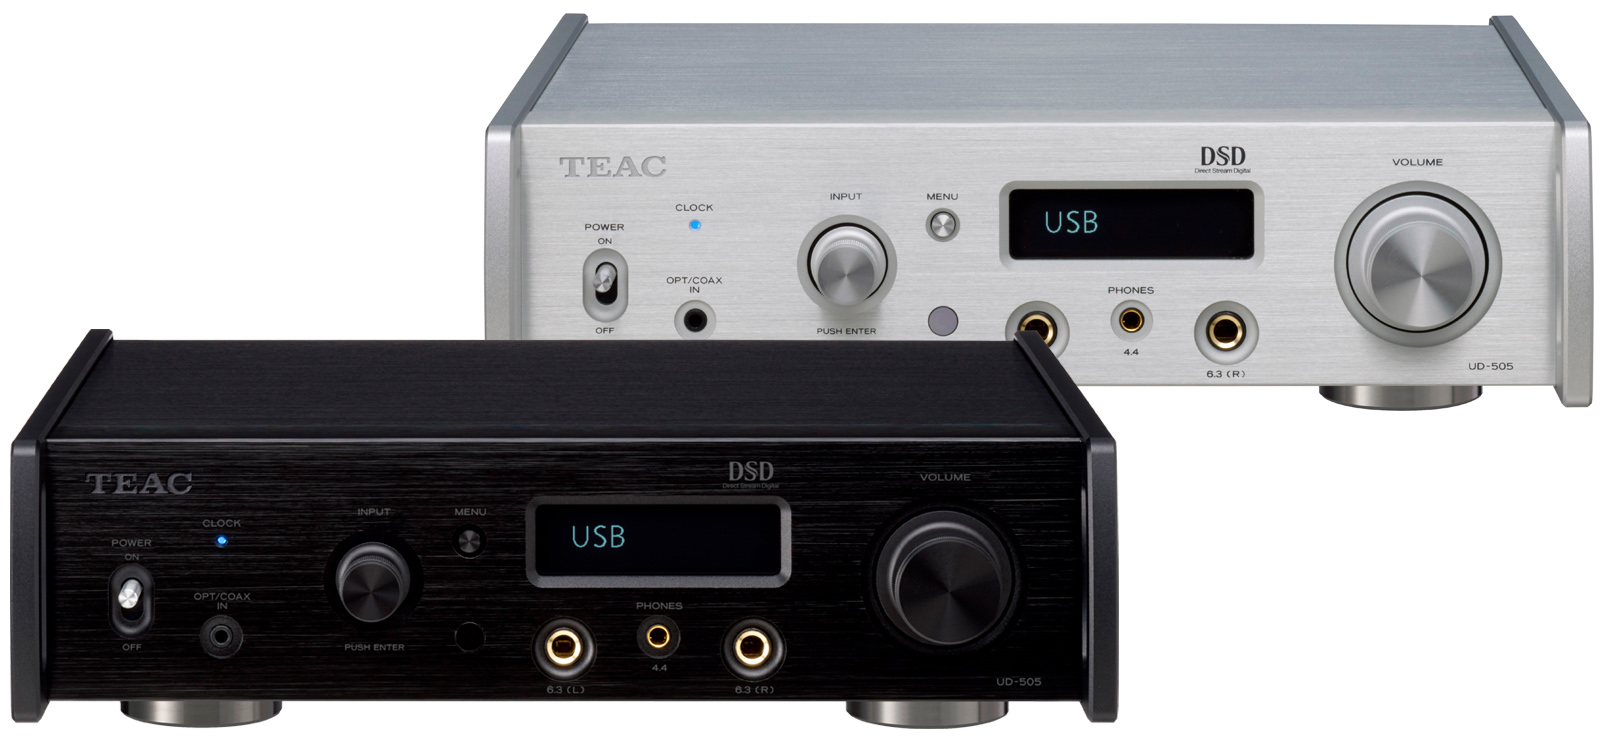 UD-505-X | 製品トップ | TEAC - オーディオ製品情報サイト